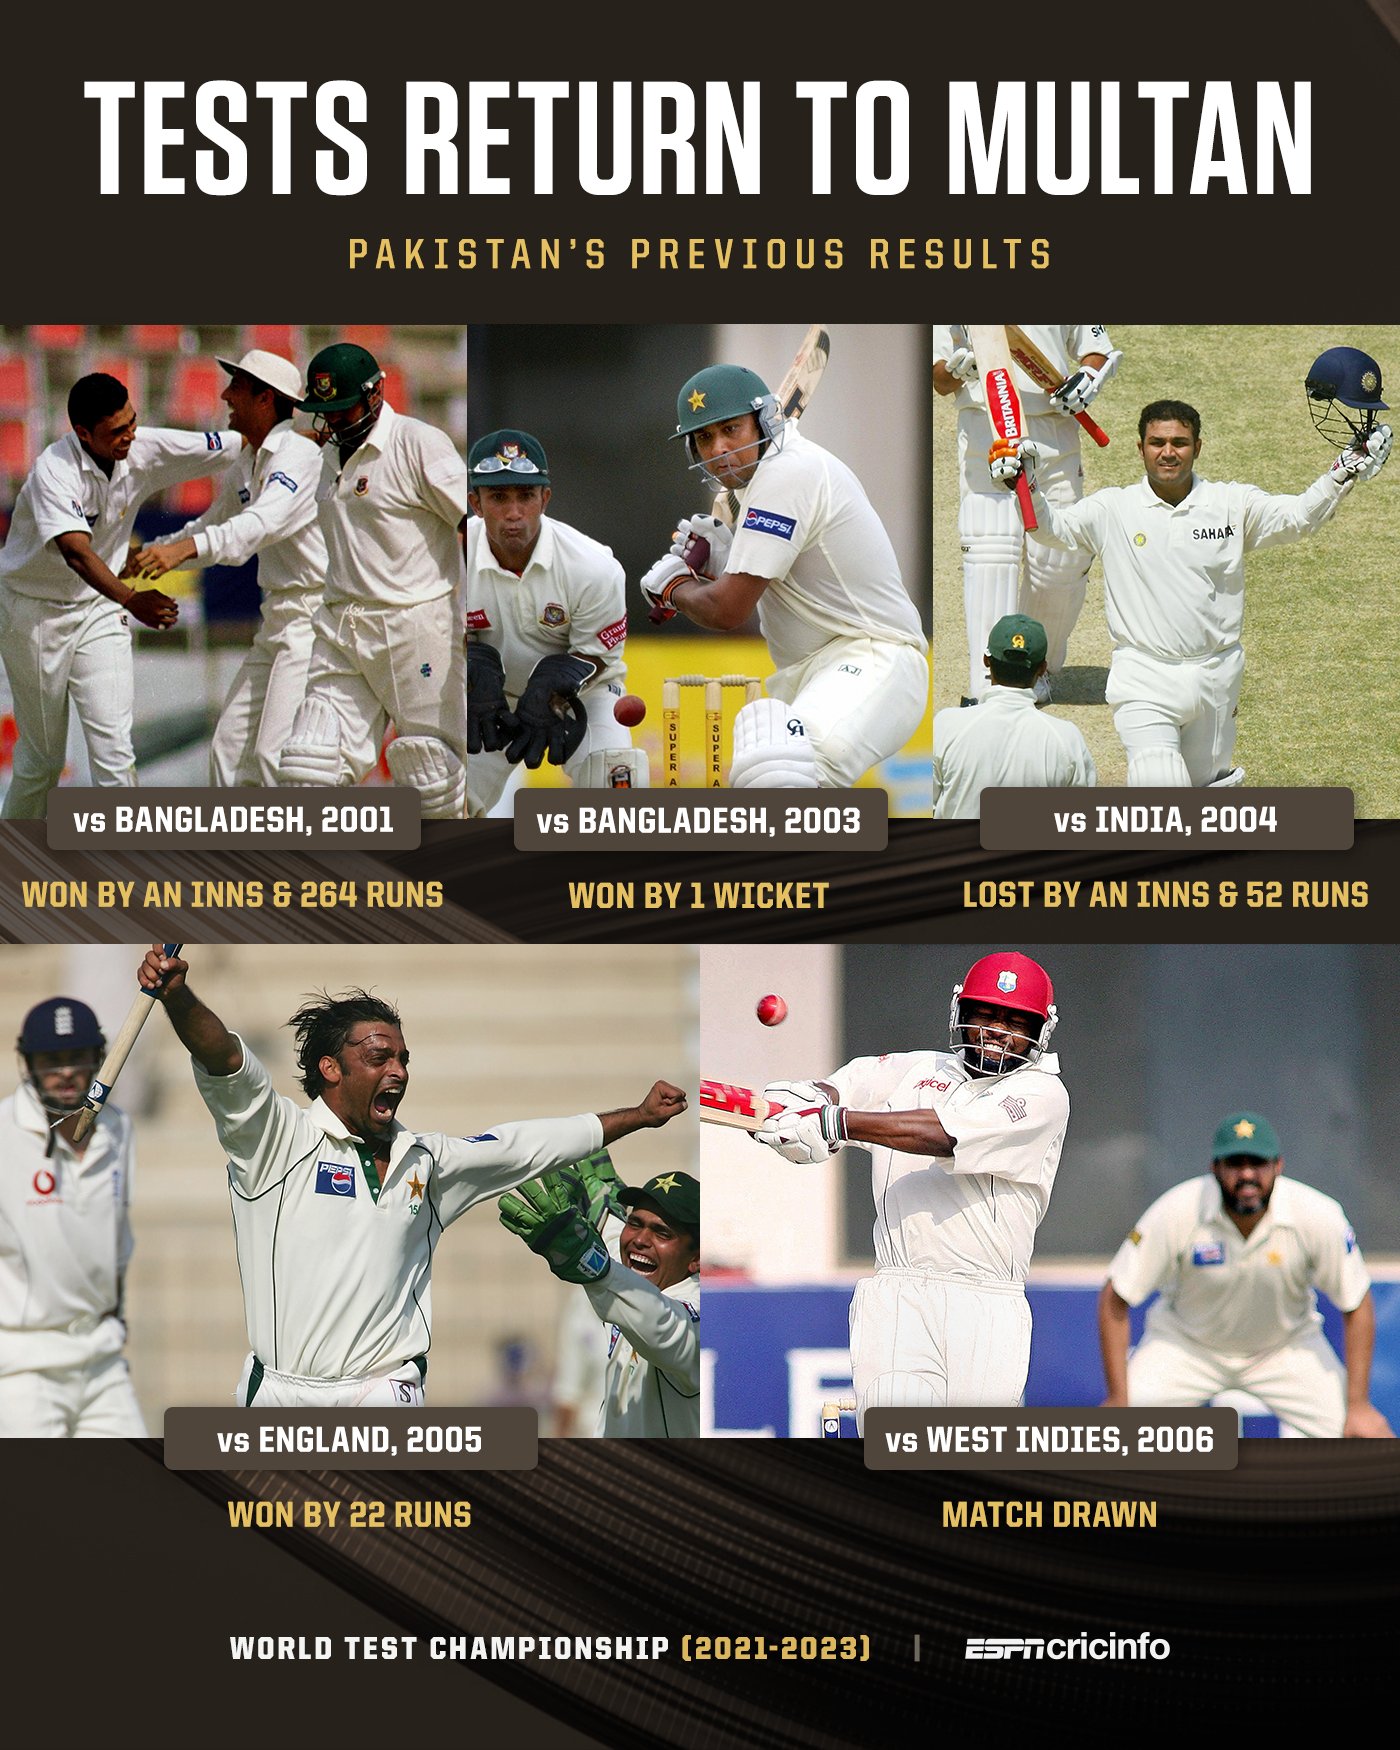 About Cricinfo Live Cricket Scores Version) Apptopia